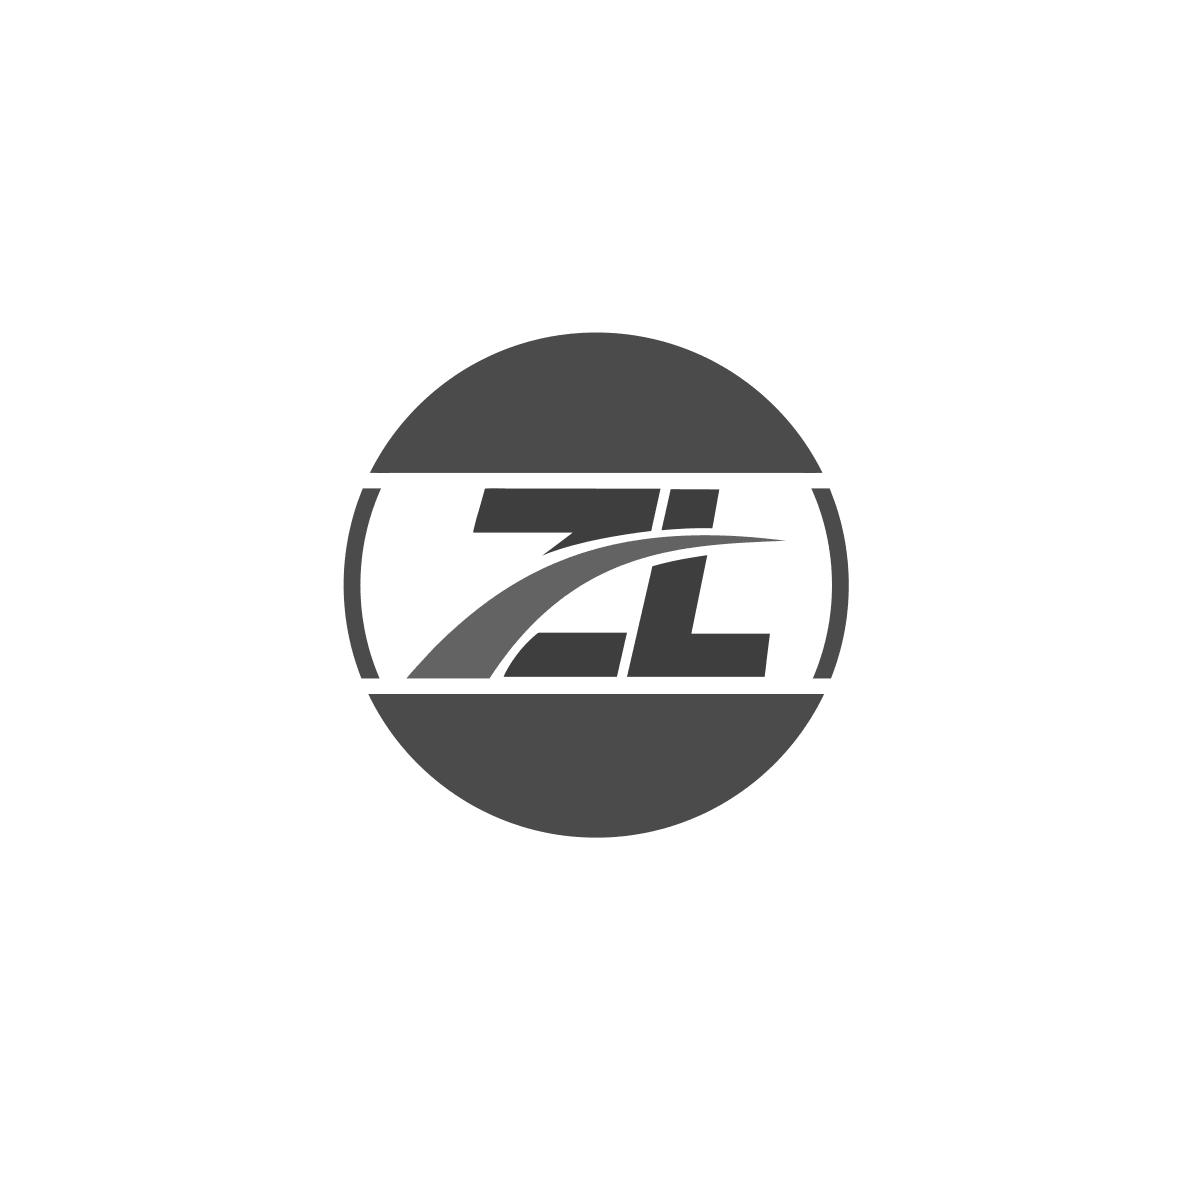 zl字母logo设计图片